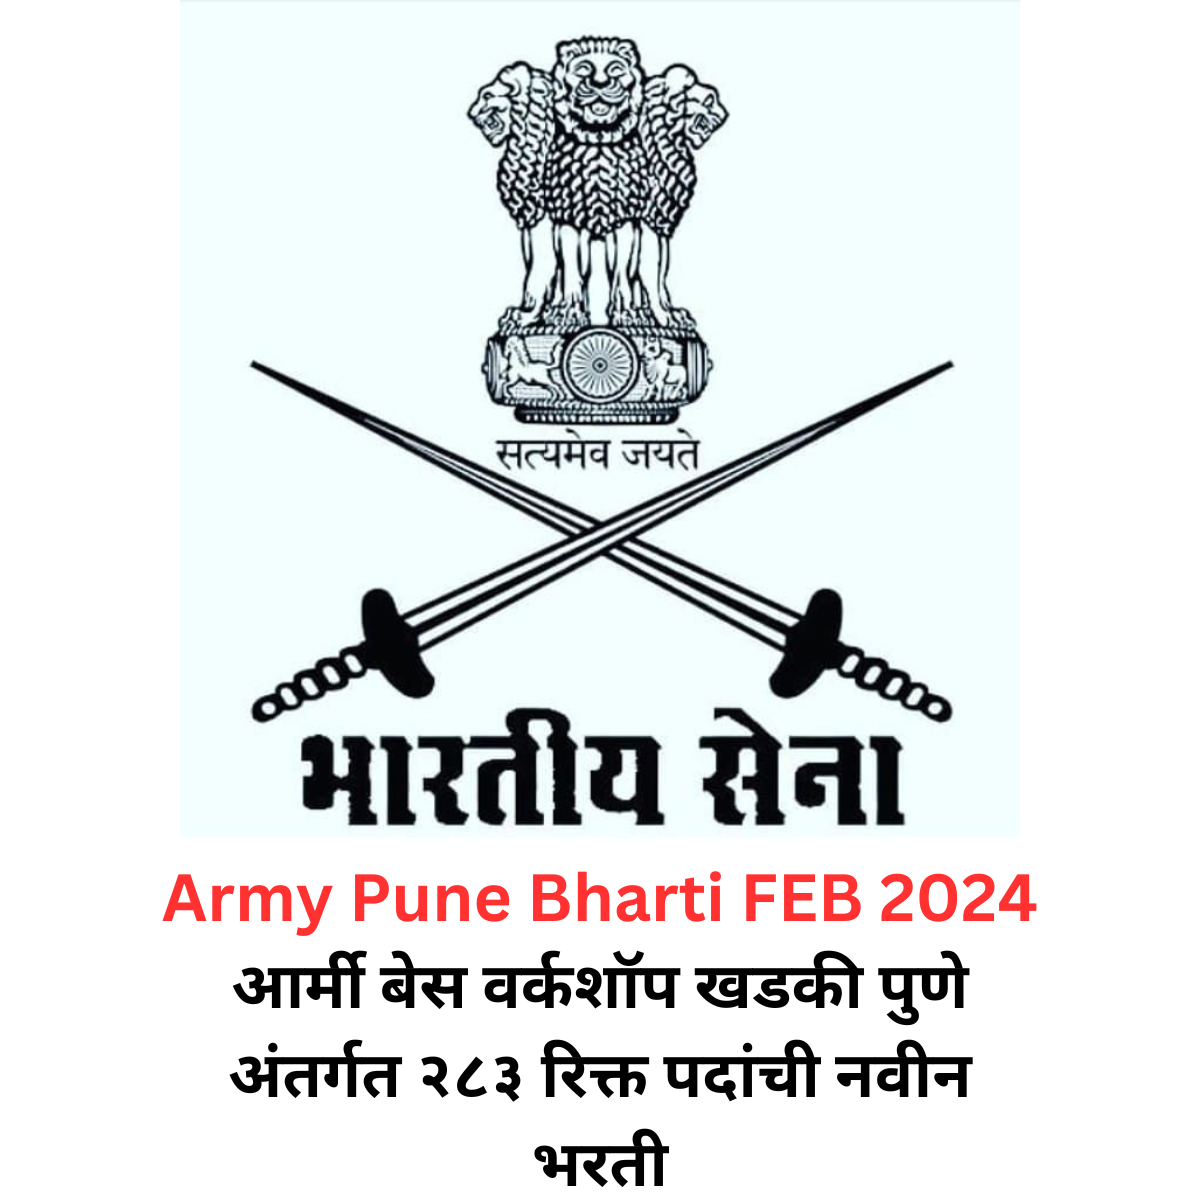 Army Pune Bharti FEB 2024